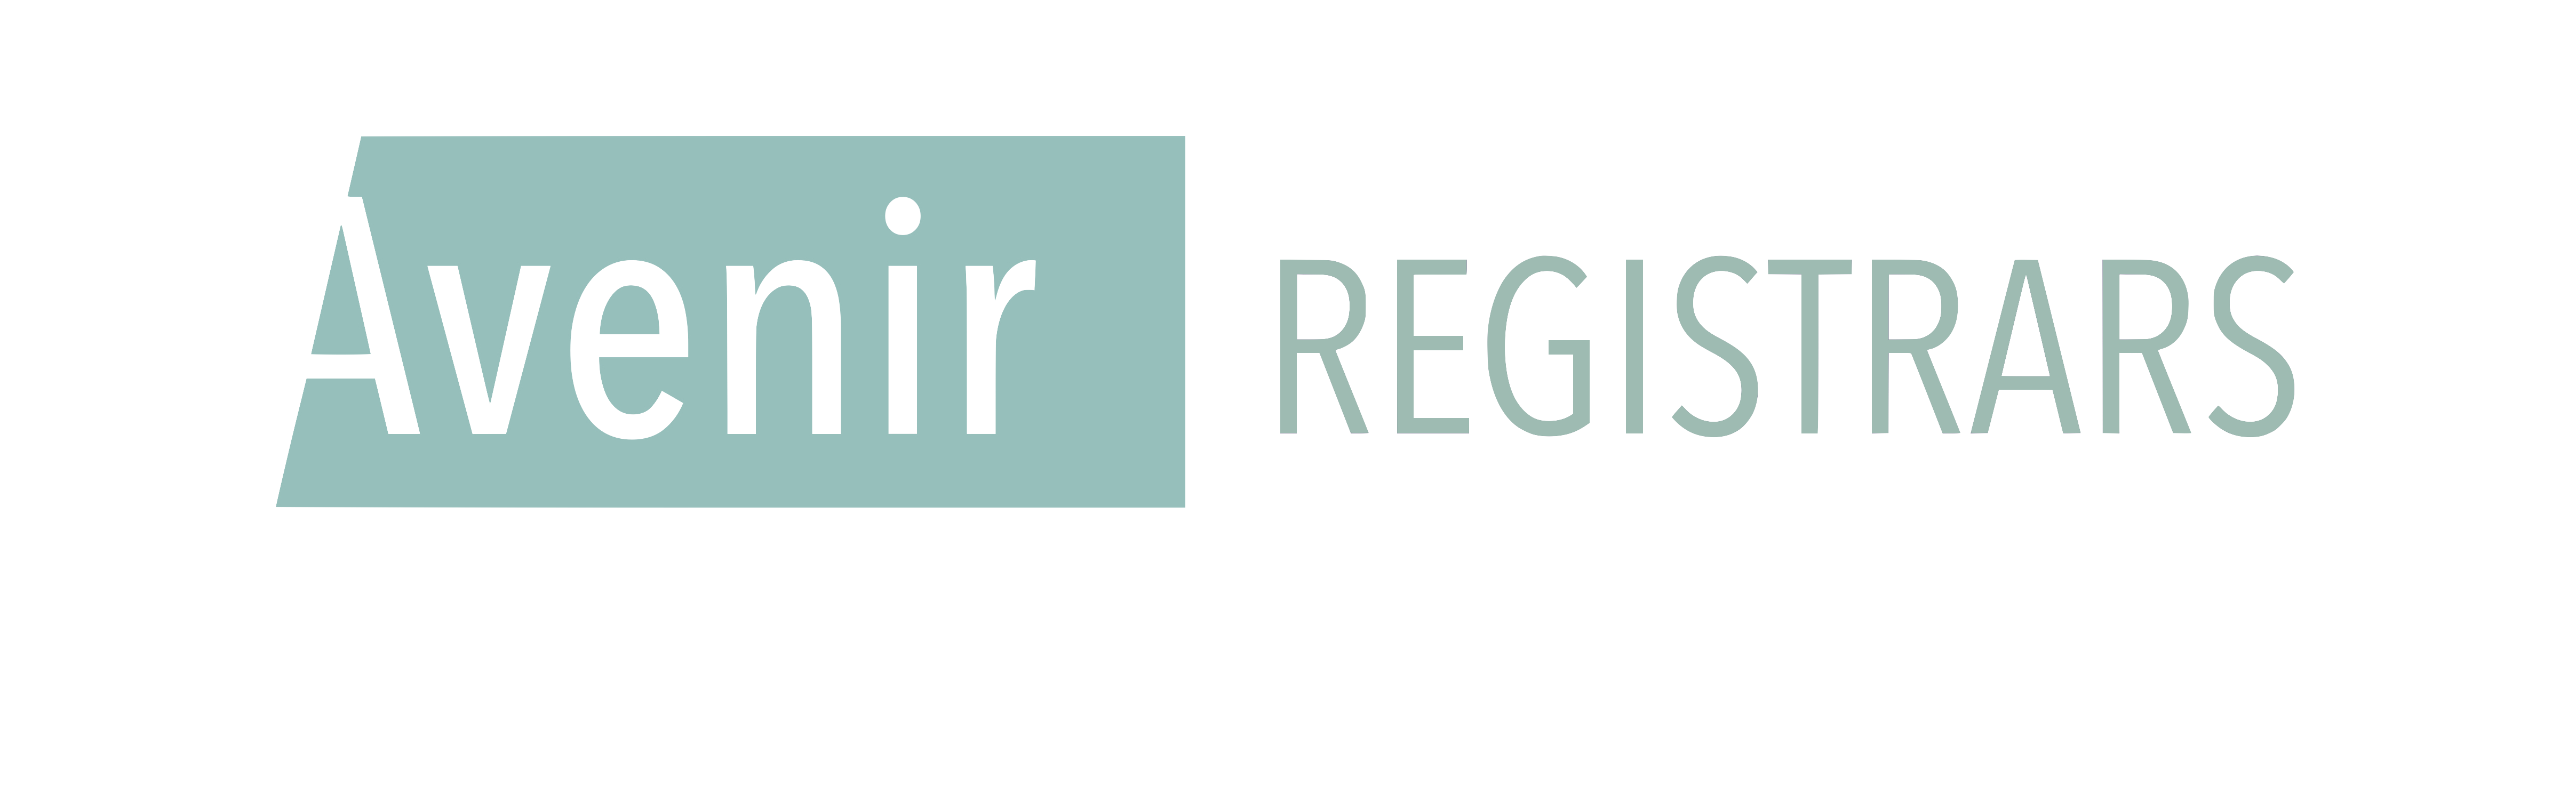 Avenir Registrars logo